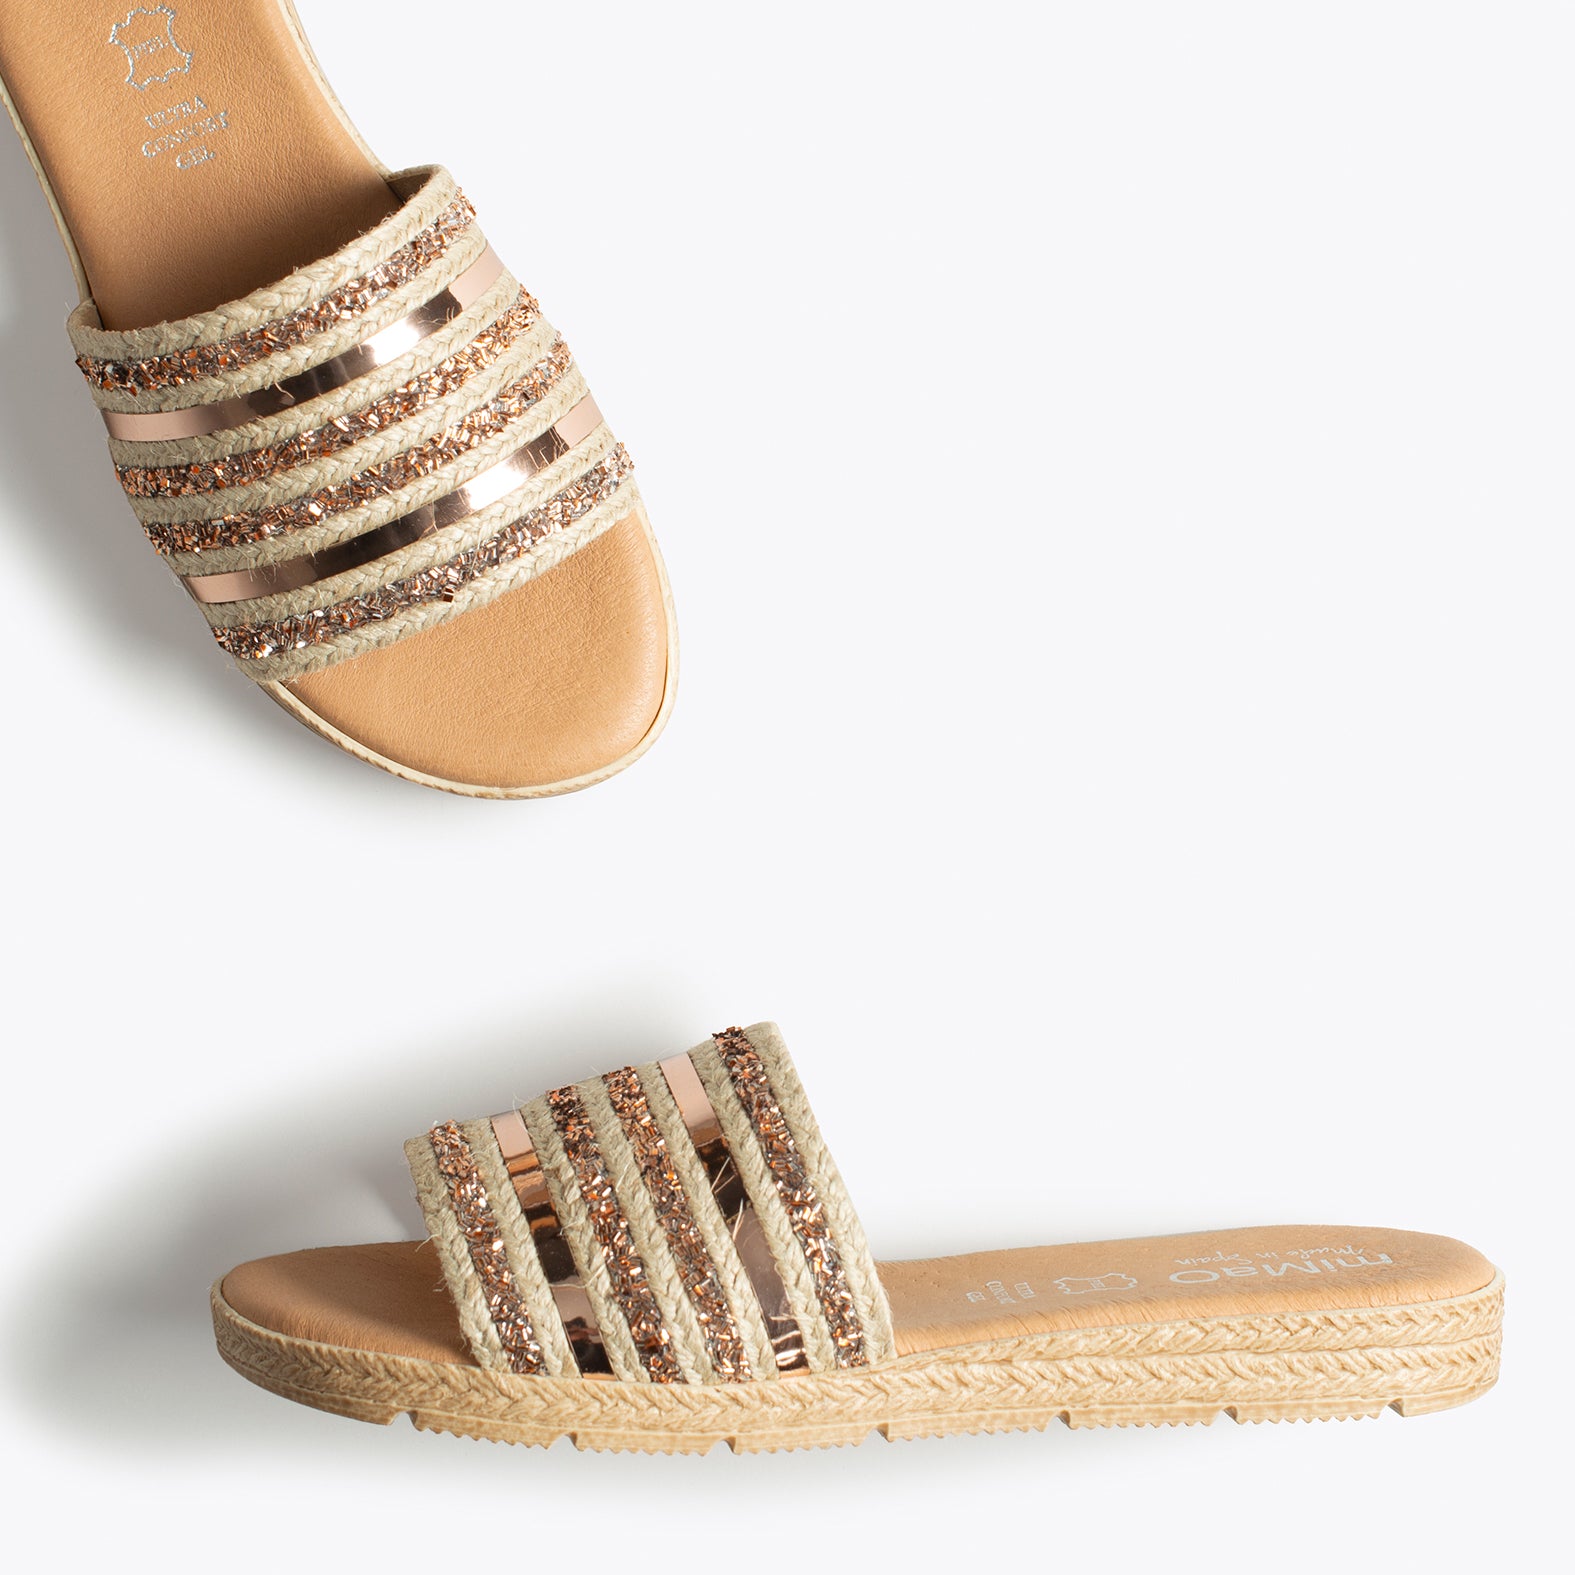 MOON – ROSE GOLD flat sandal with metallic details